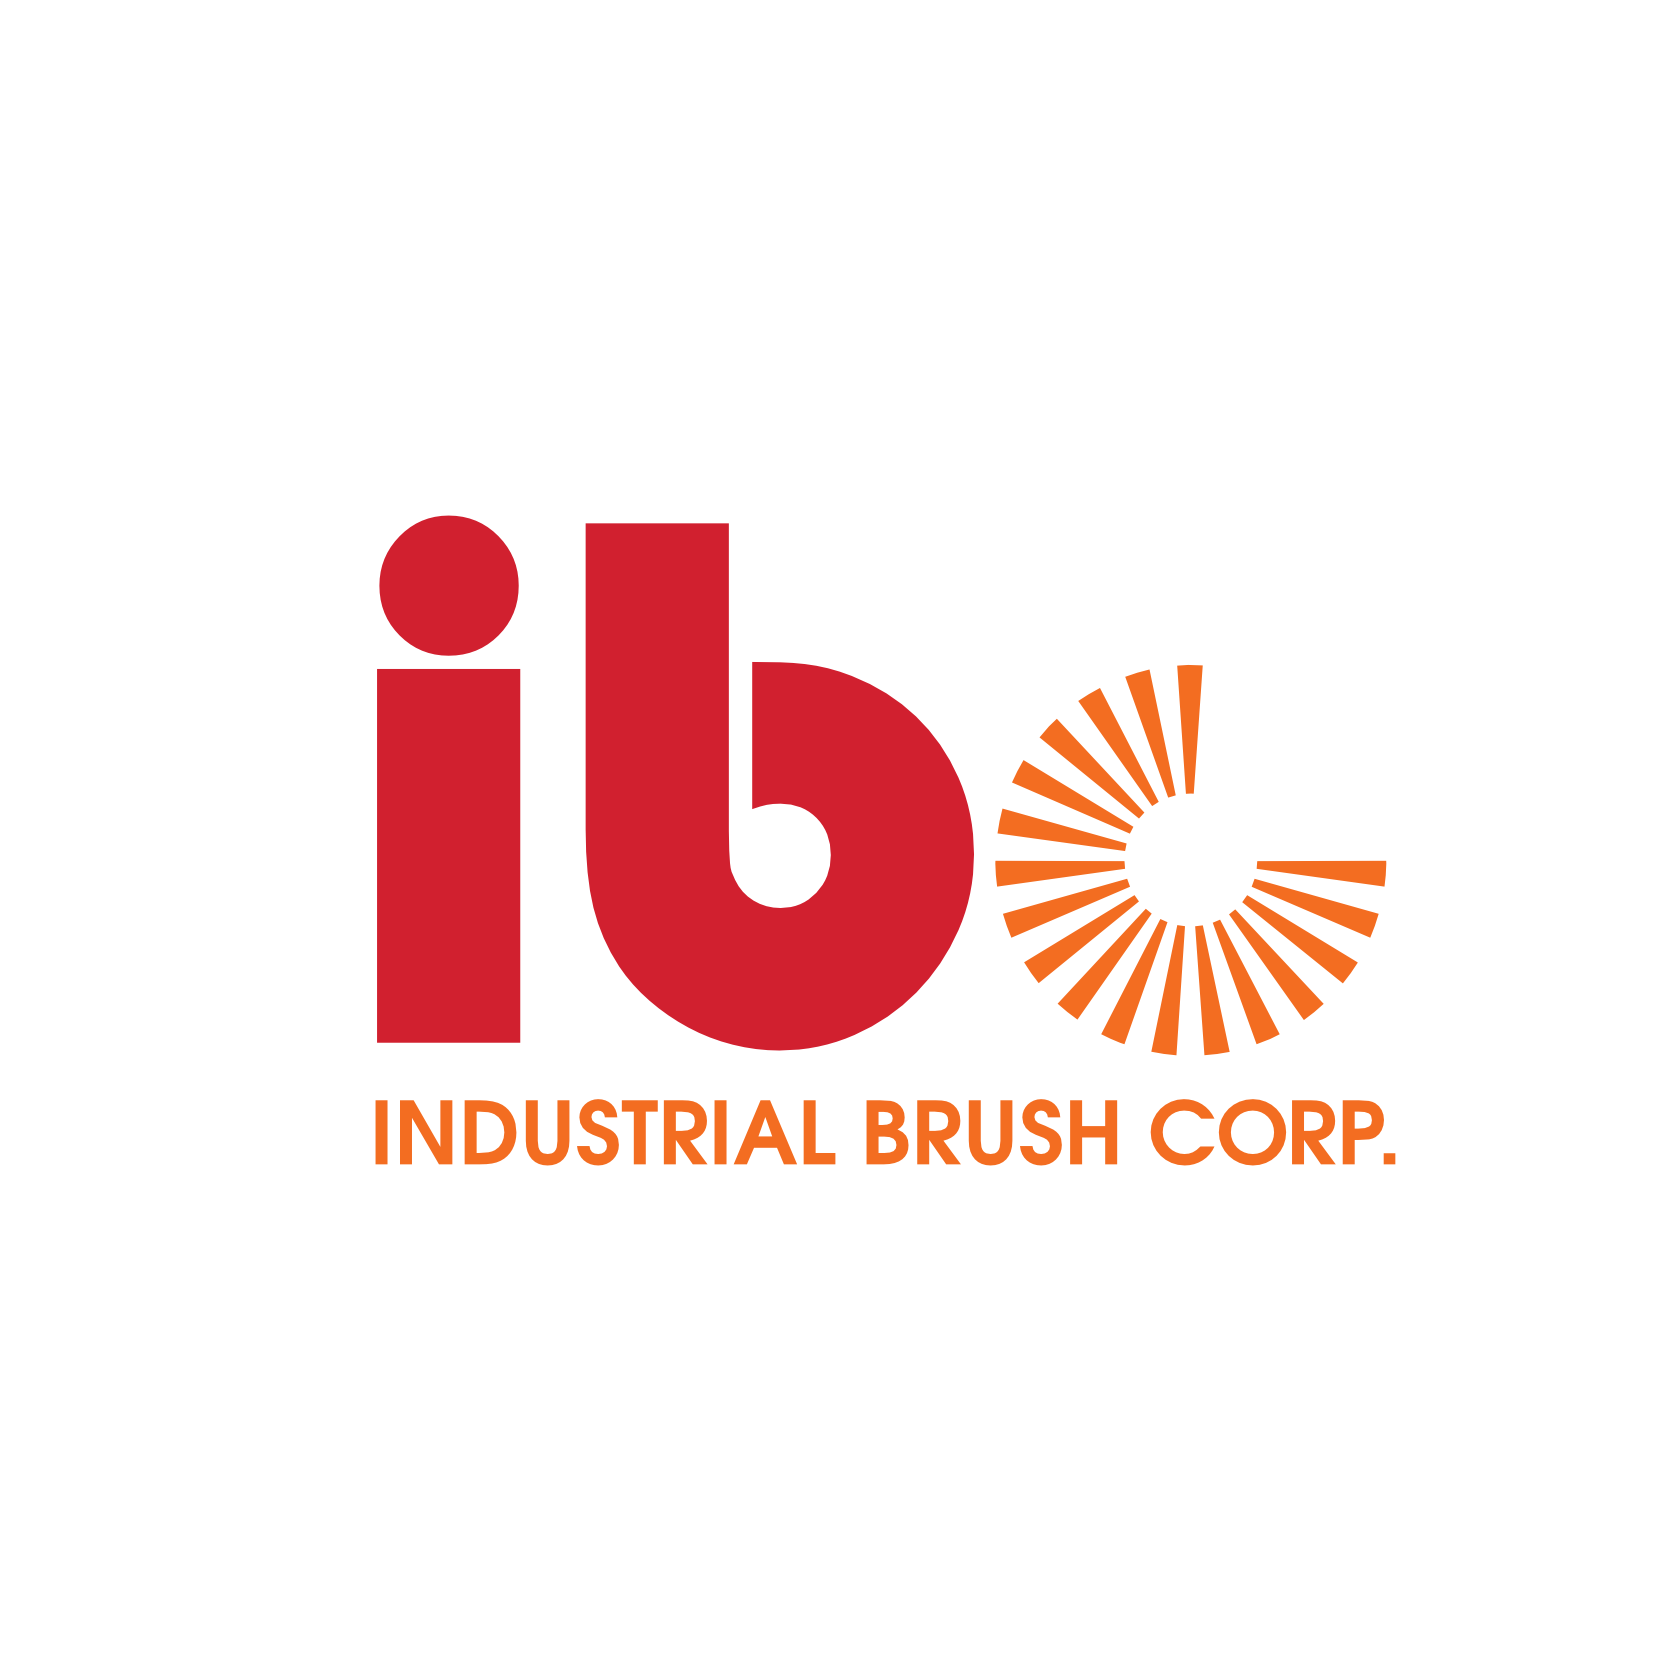 Industrial Brush Corp